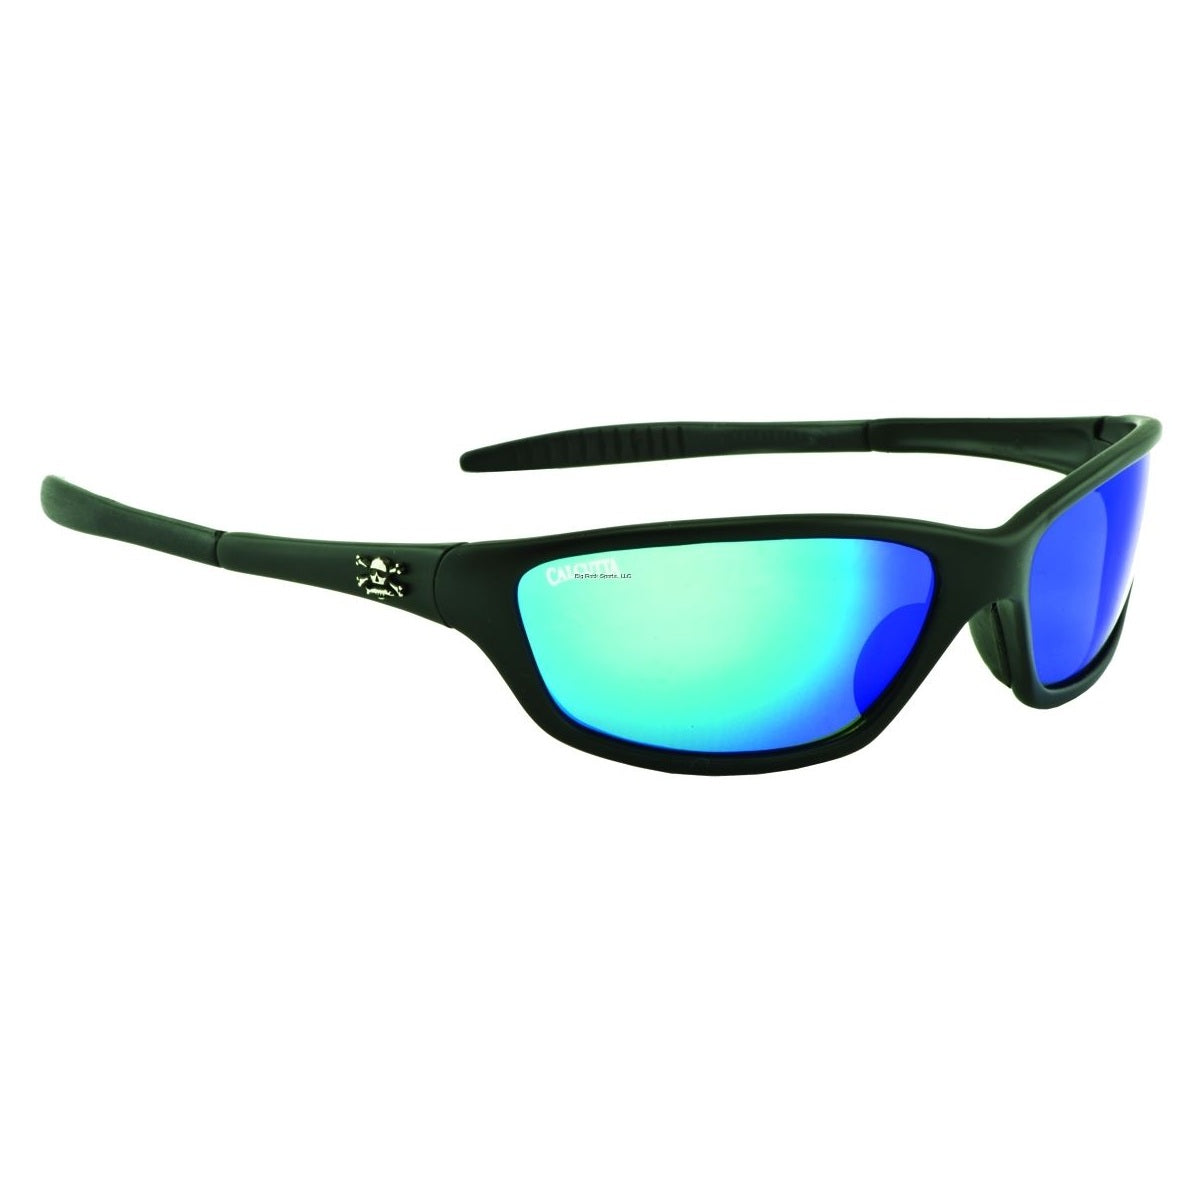 Calcutta Palma Sola Polarized Sunglasses Shiny Black Frame/Blue Mirror